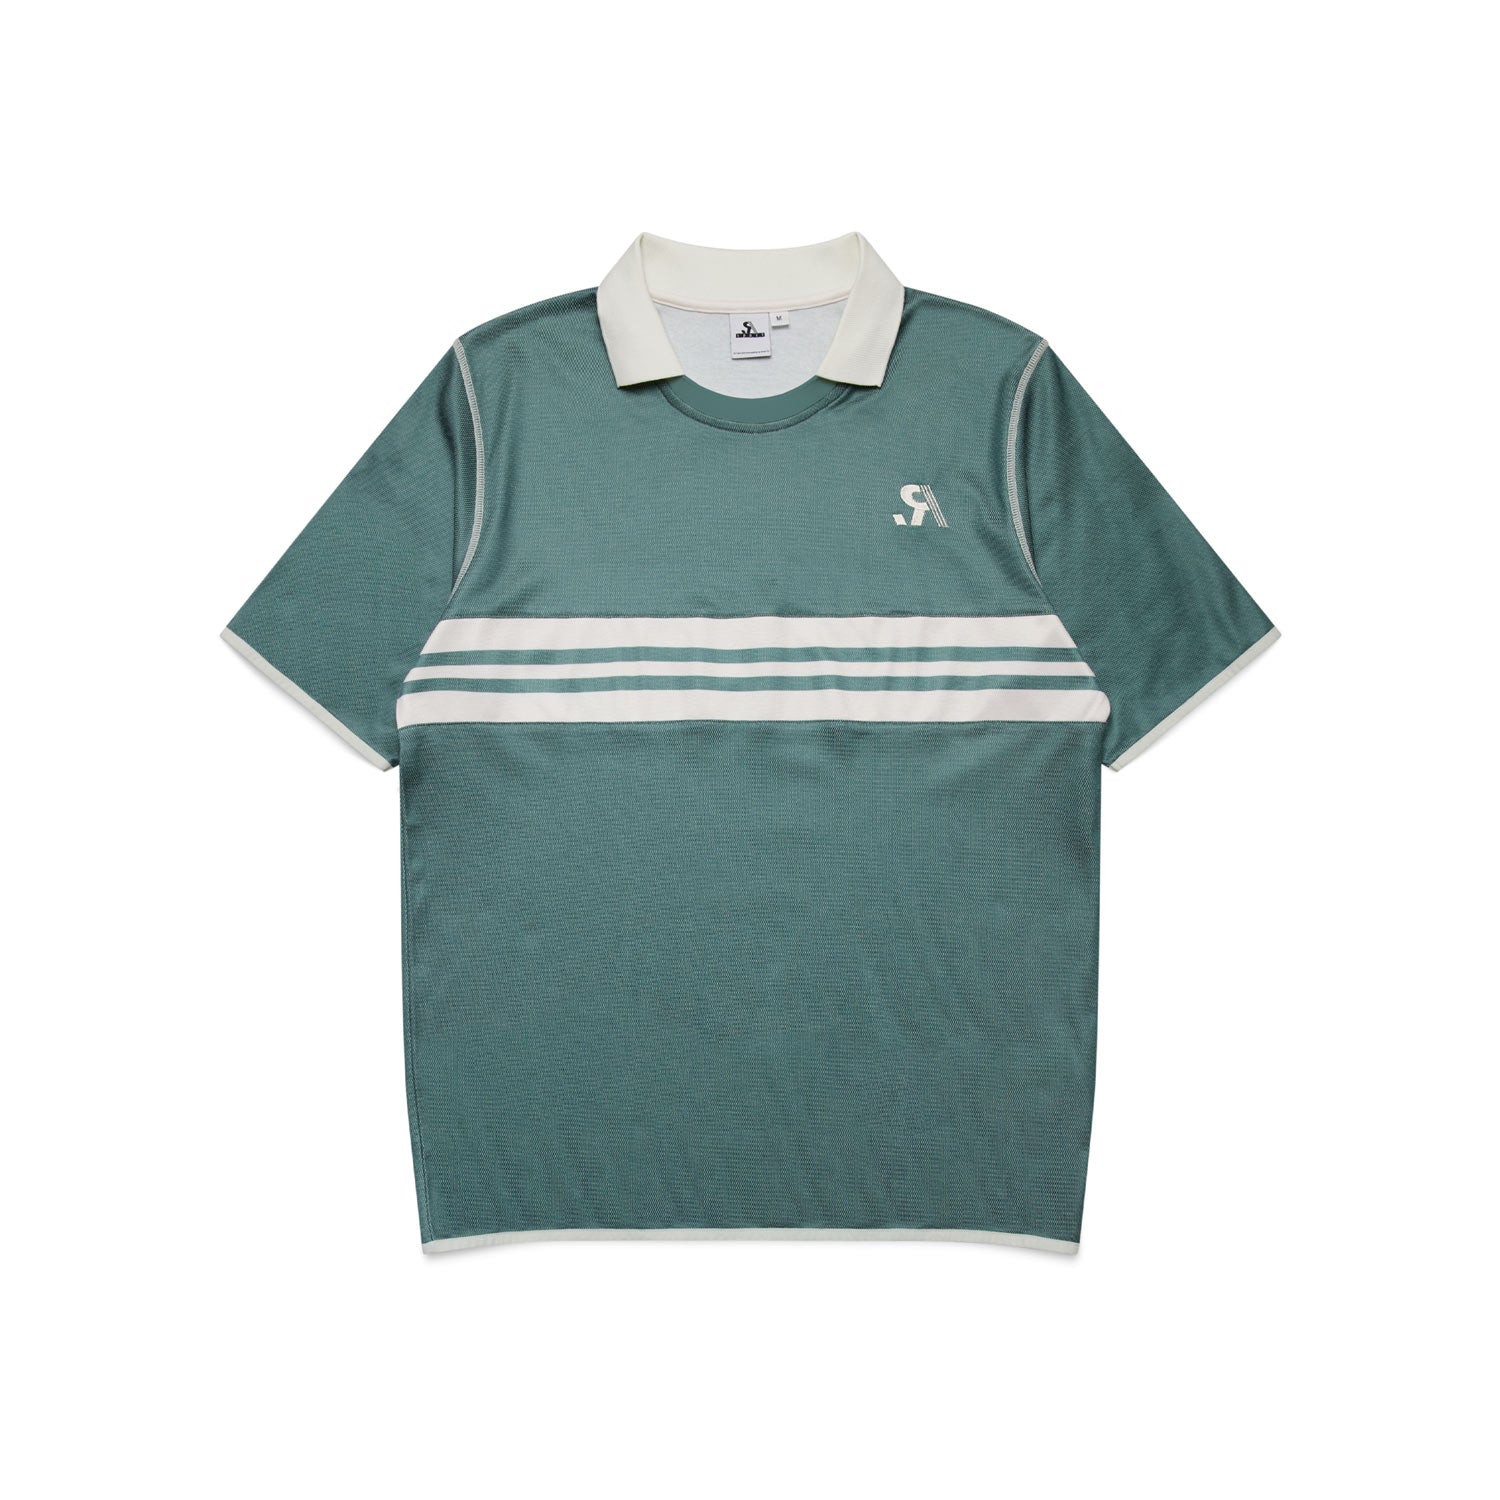 R.SPORT Tennis Polo Top - Green/Cream